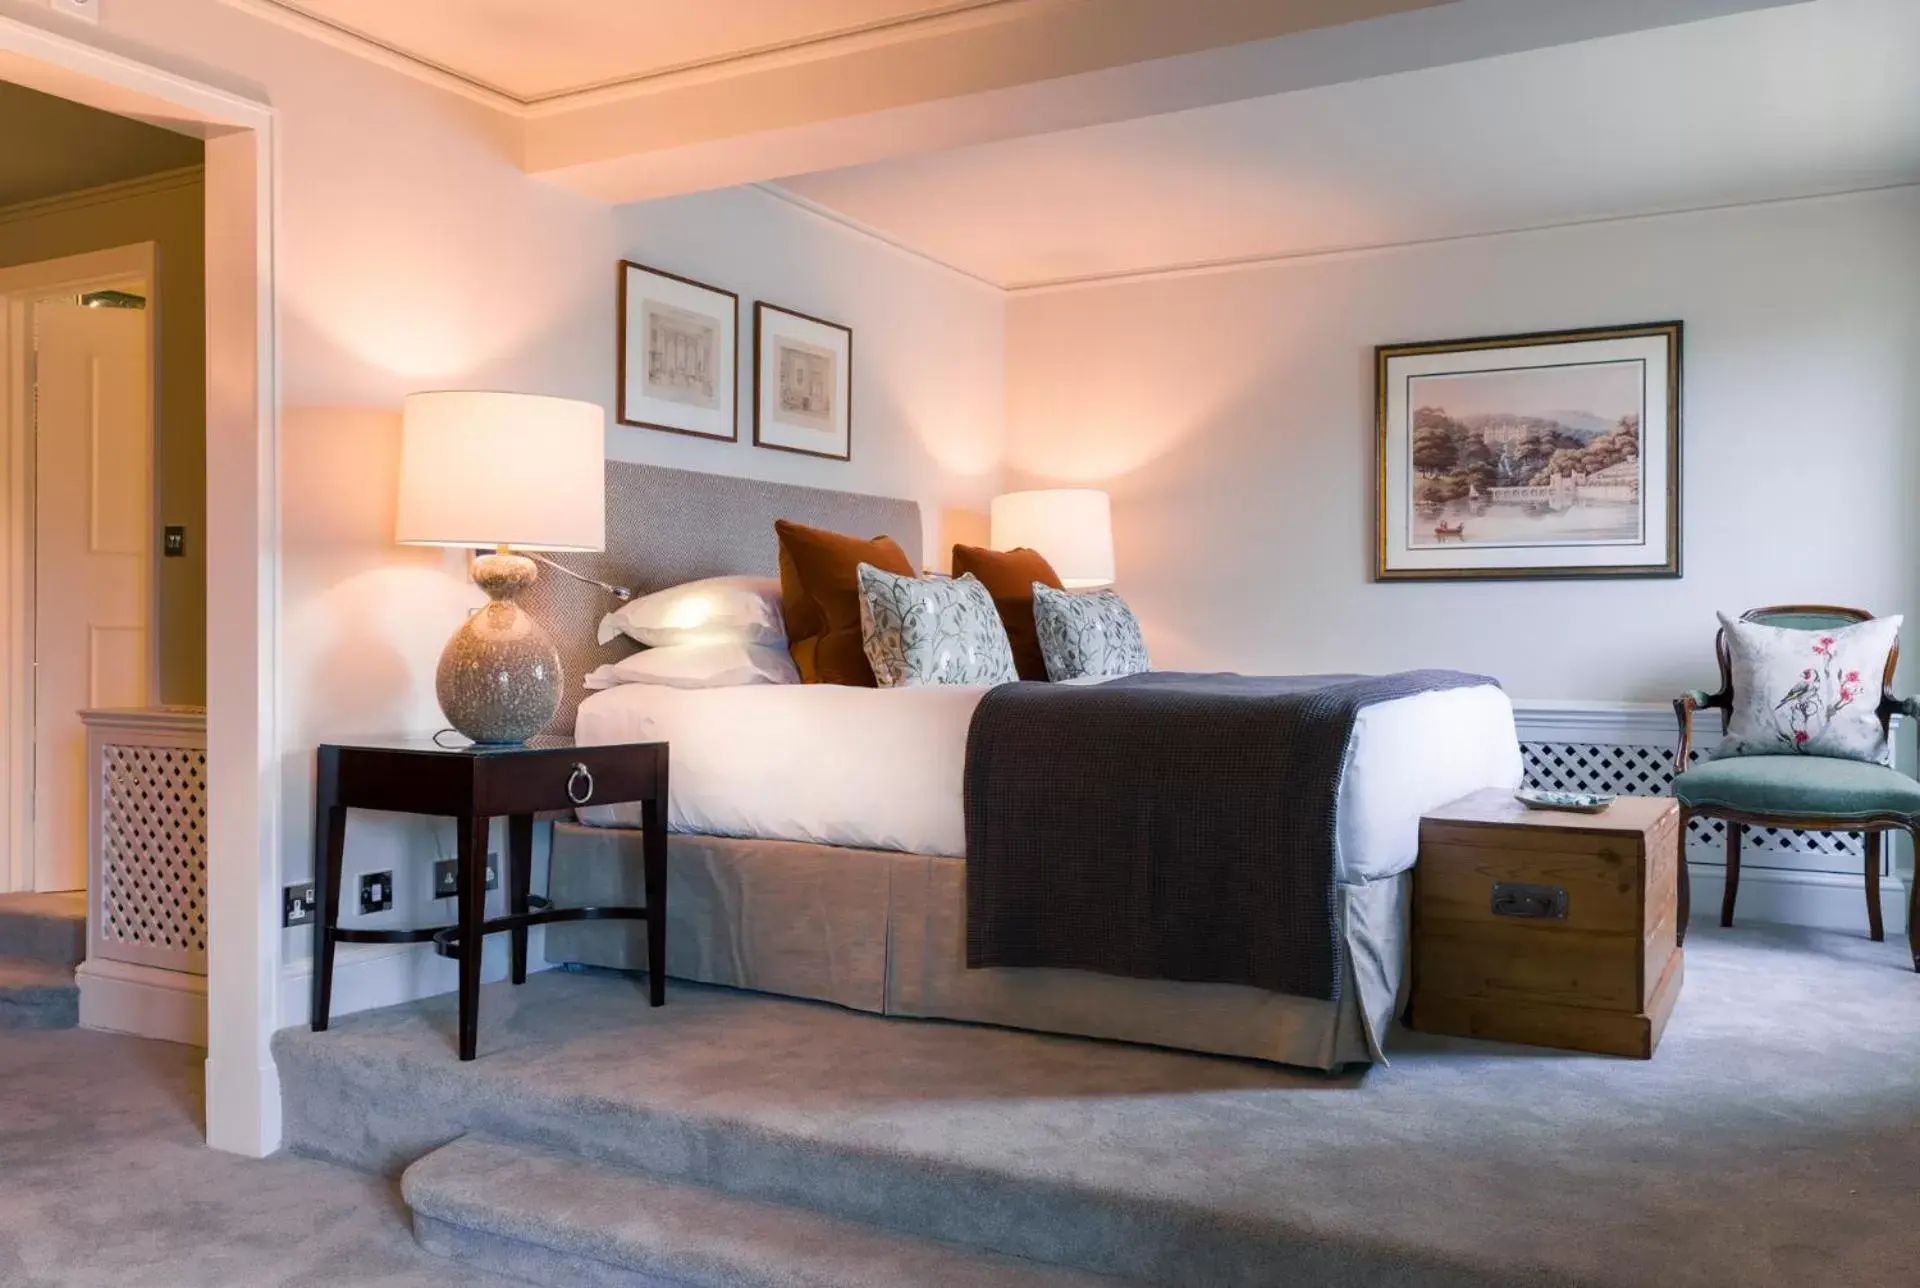 Bedroom, Bed in Chewton Glen Hotel - an Iconic Luxury Hotel